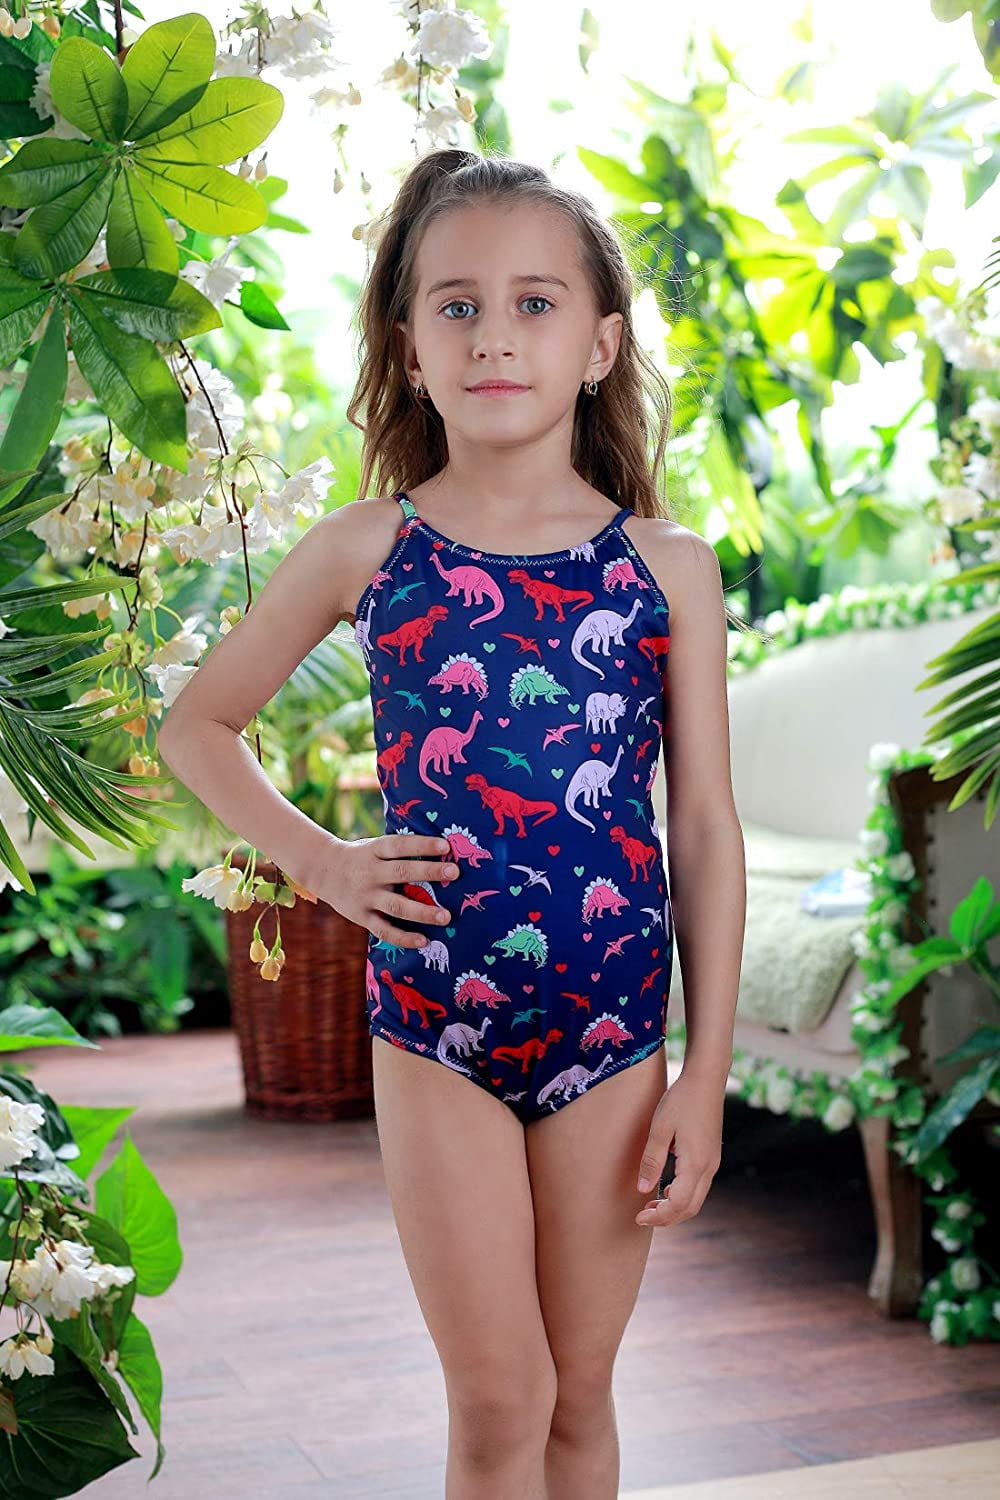 Gecter Girls Swimsuit 3-10 Years One Piece Bathing Suit Quick Dry Beach Swimwear